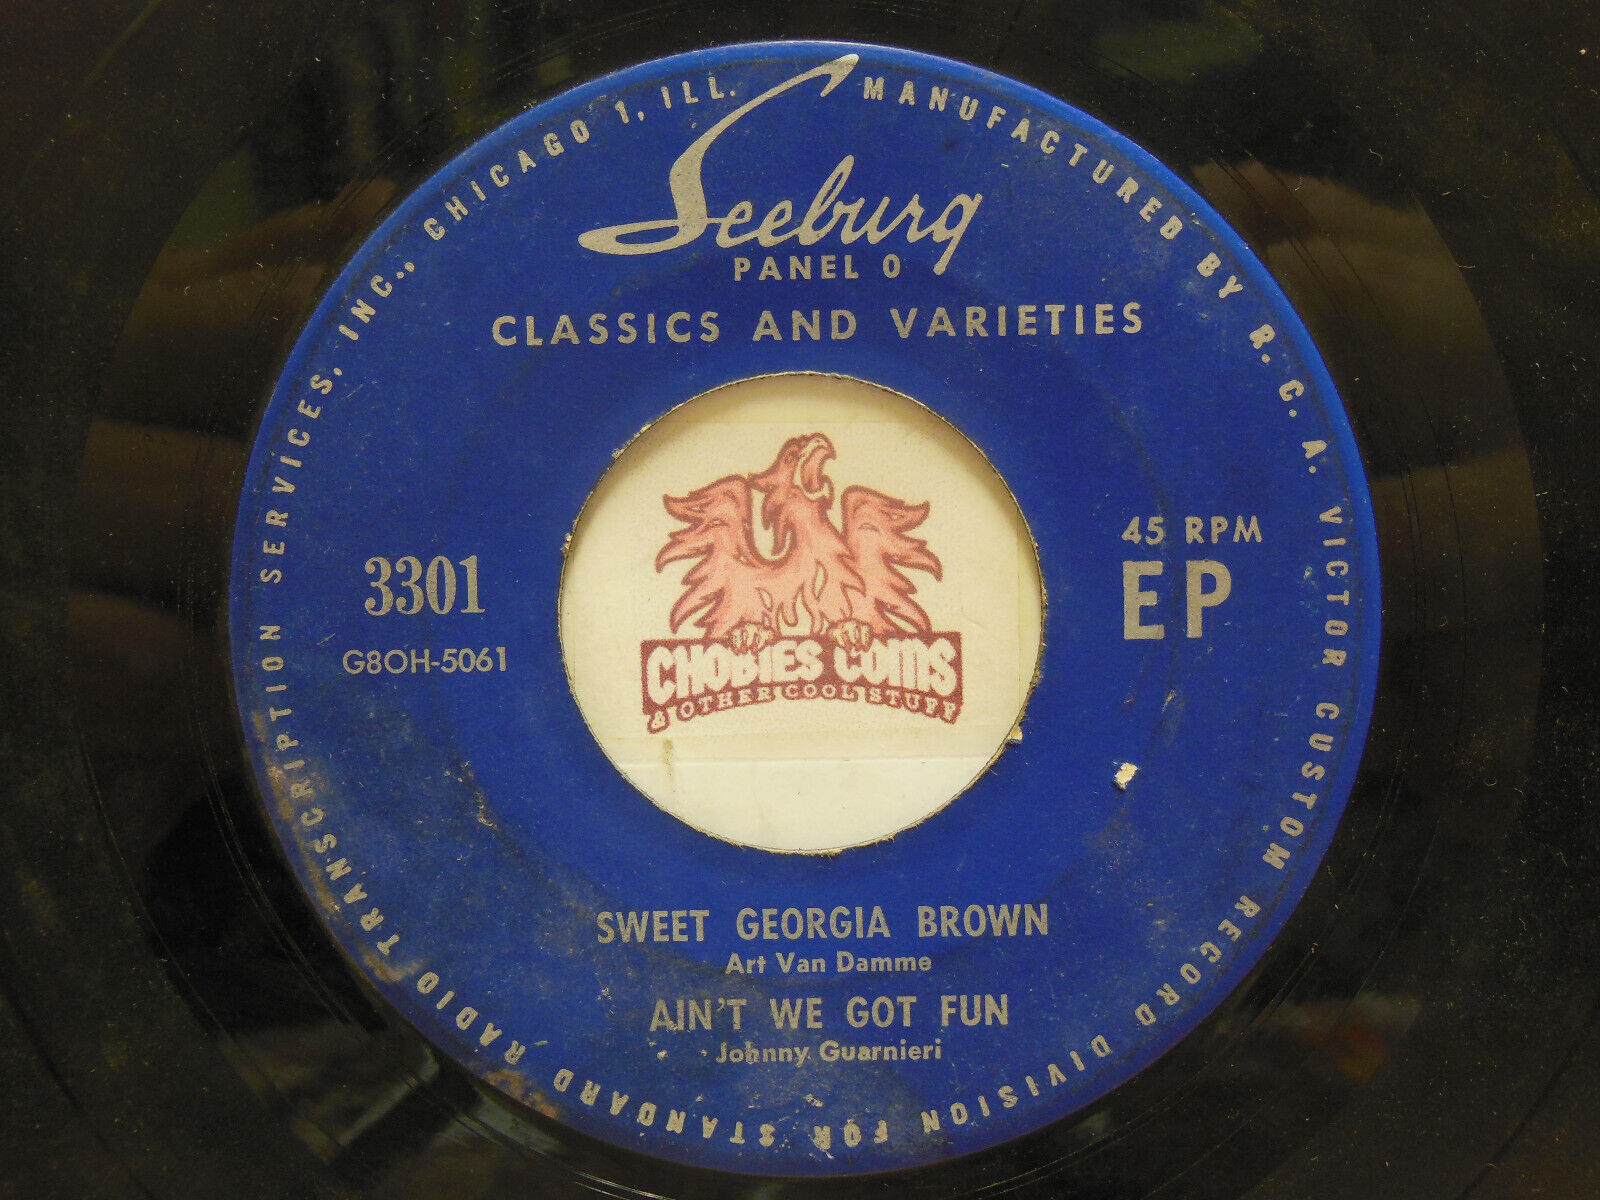 Seeburg 3301 - Panel 0, Classics And Varieties, 4 Track EP, 45 RPM, G+ (22G)